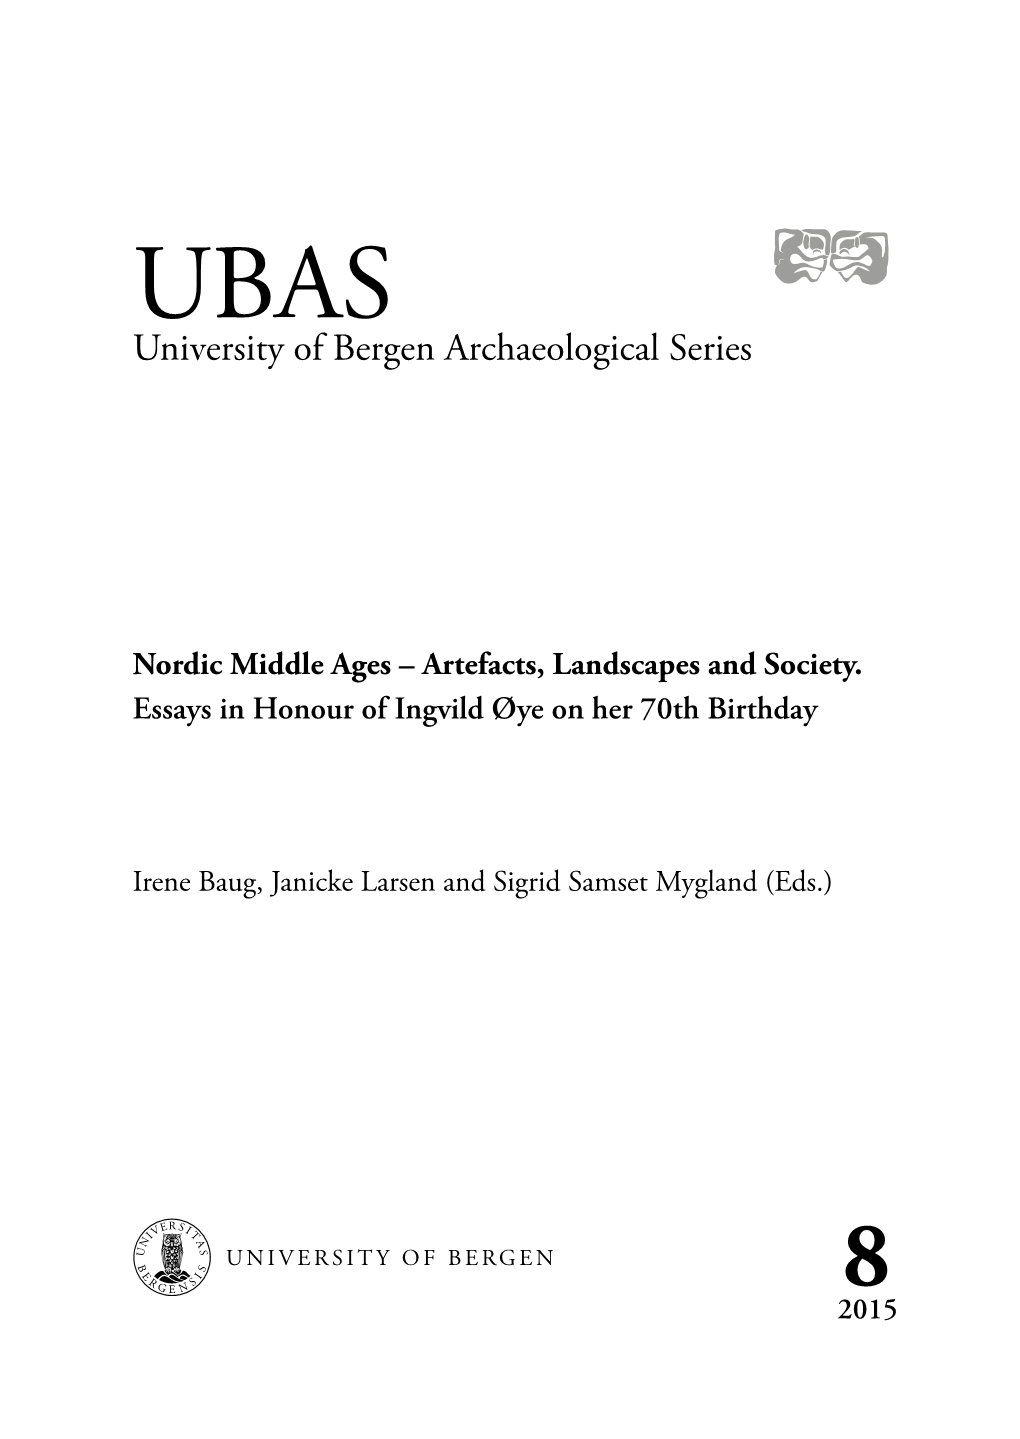 UBAS of Bergen Archaeological Series